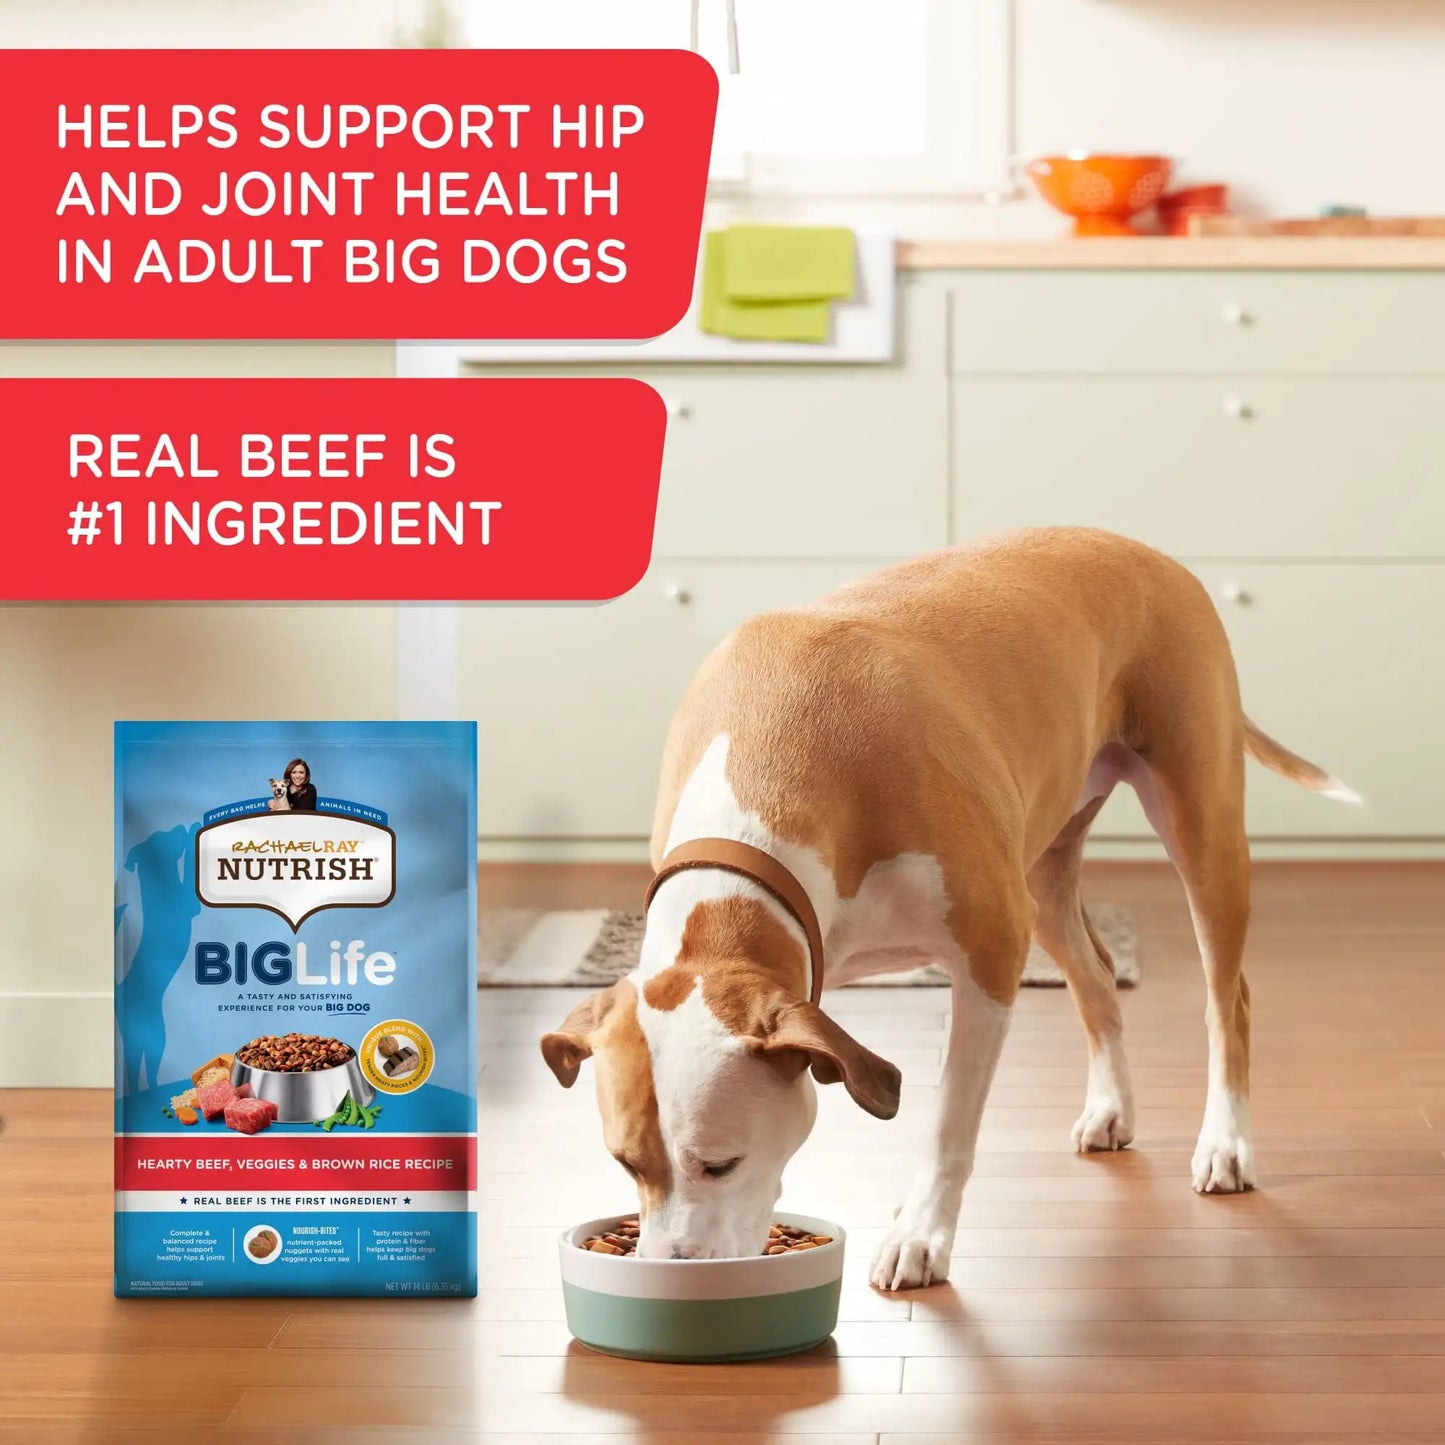 Rachael Ray Nutrish Big Life Dry Dog Food for Big Dogs, Hearty Beef, Veggies & Brown Rice Recipe, 14 lb Bag